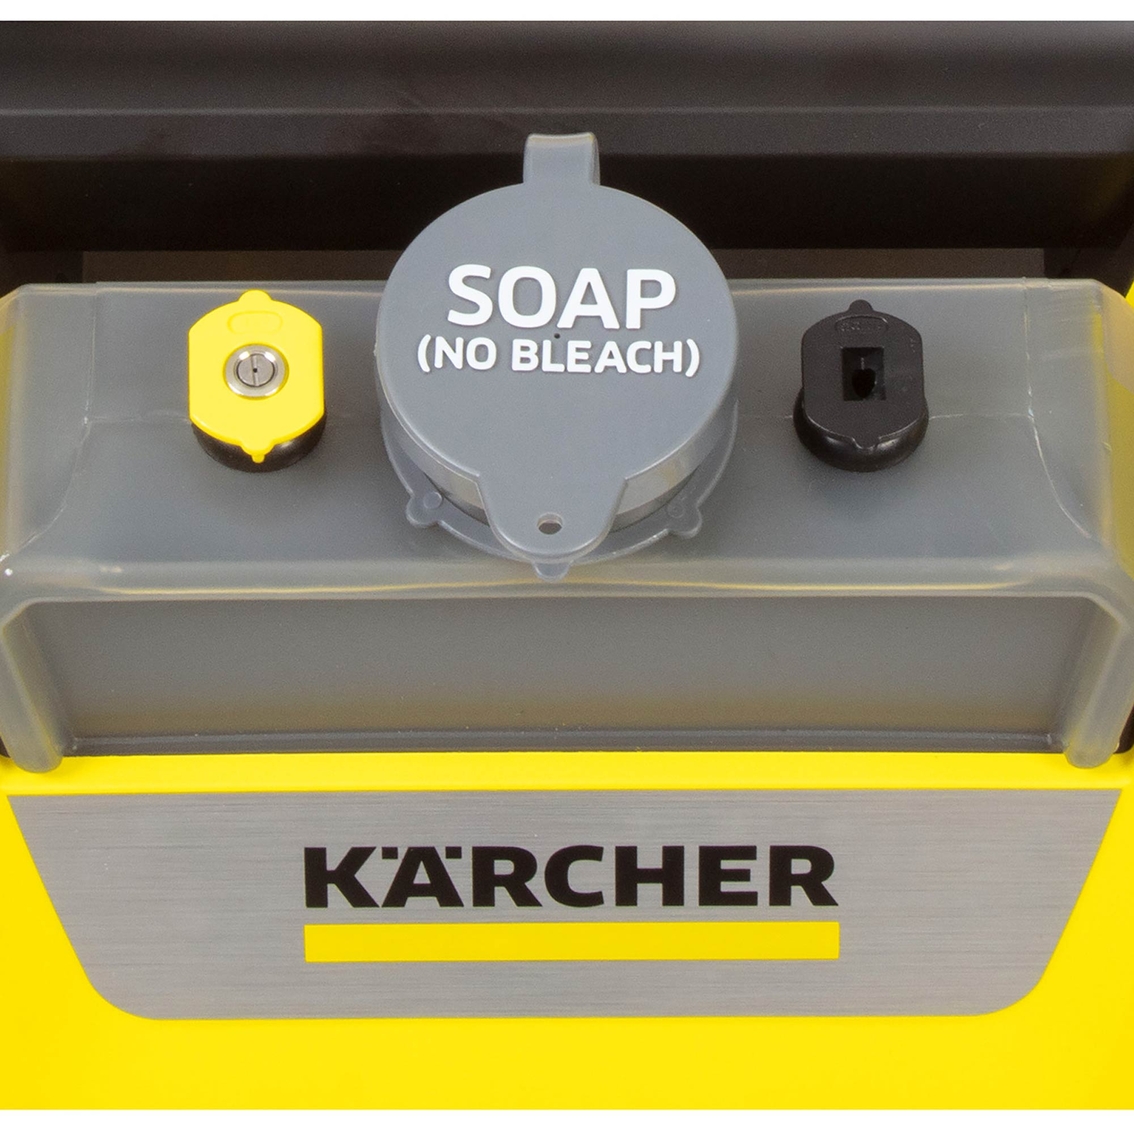 Karcher K1800PS Pressure Washer 120V 1800 PSI 1.2 GPM Corded Electric